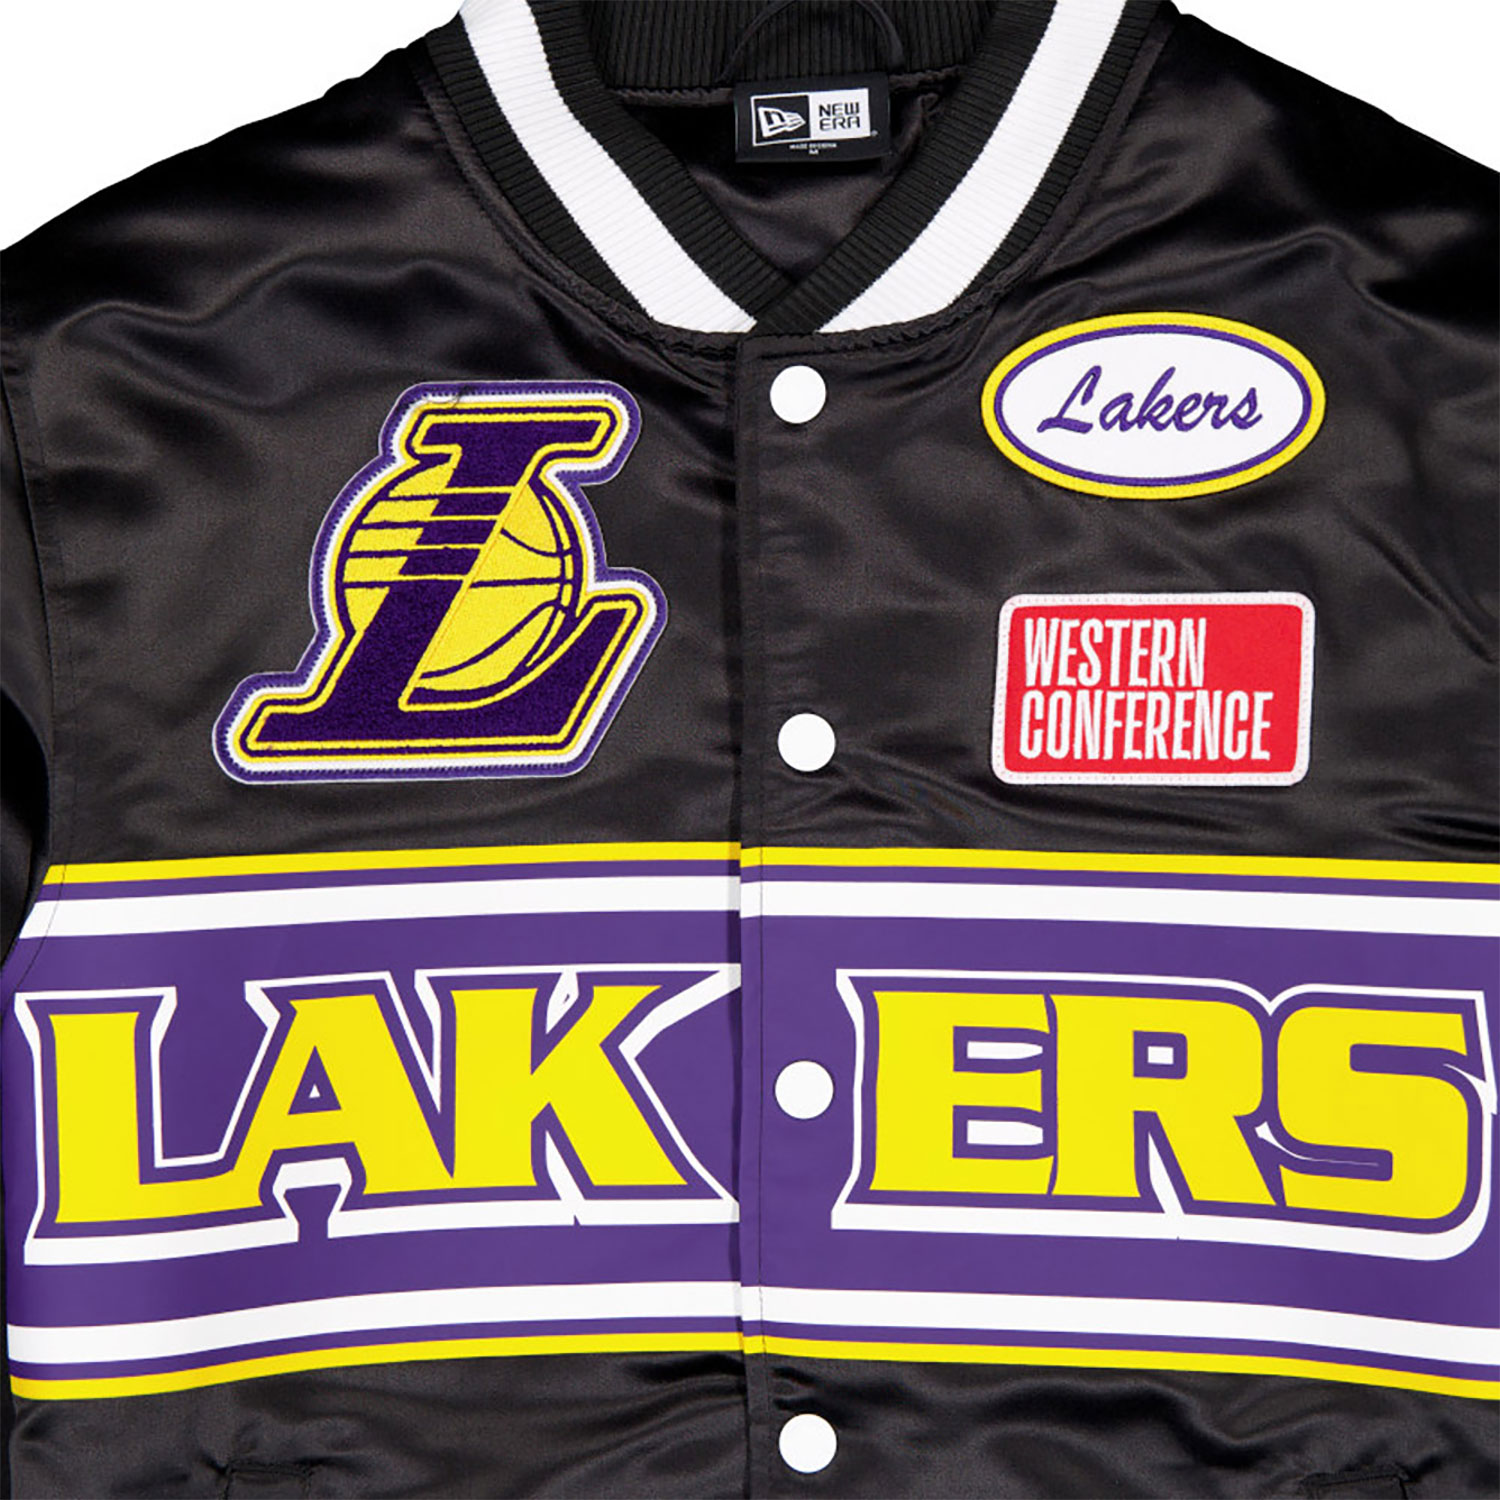 LA Lakers NBA Rally Drive Black Bomber Jacket